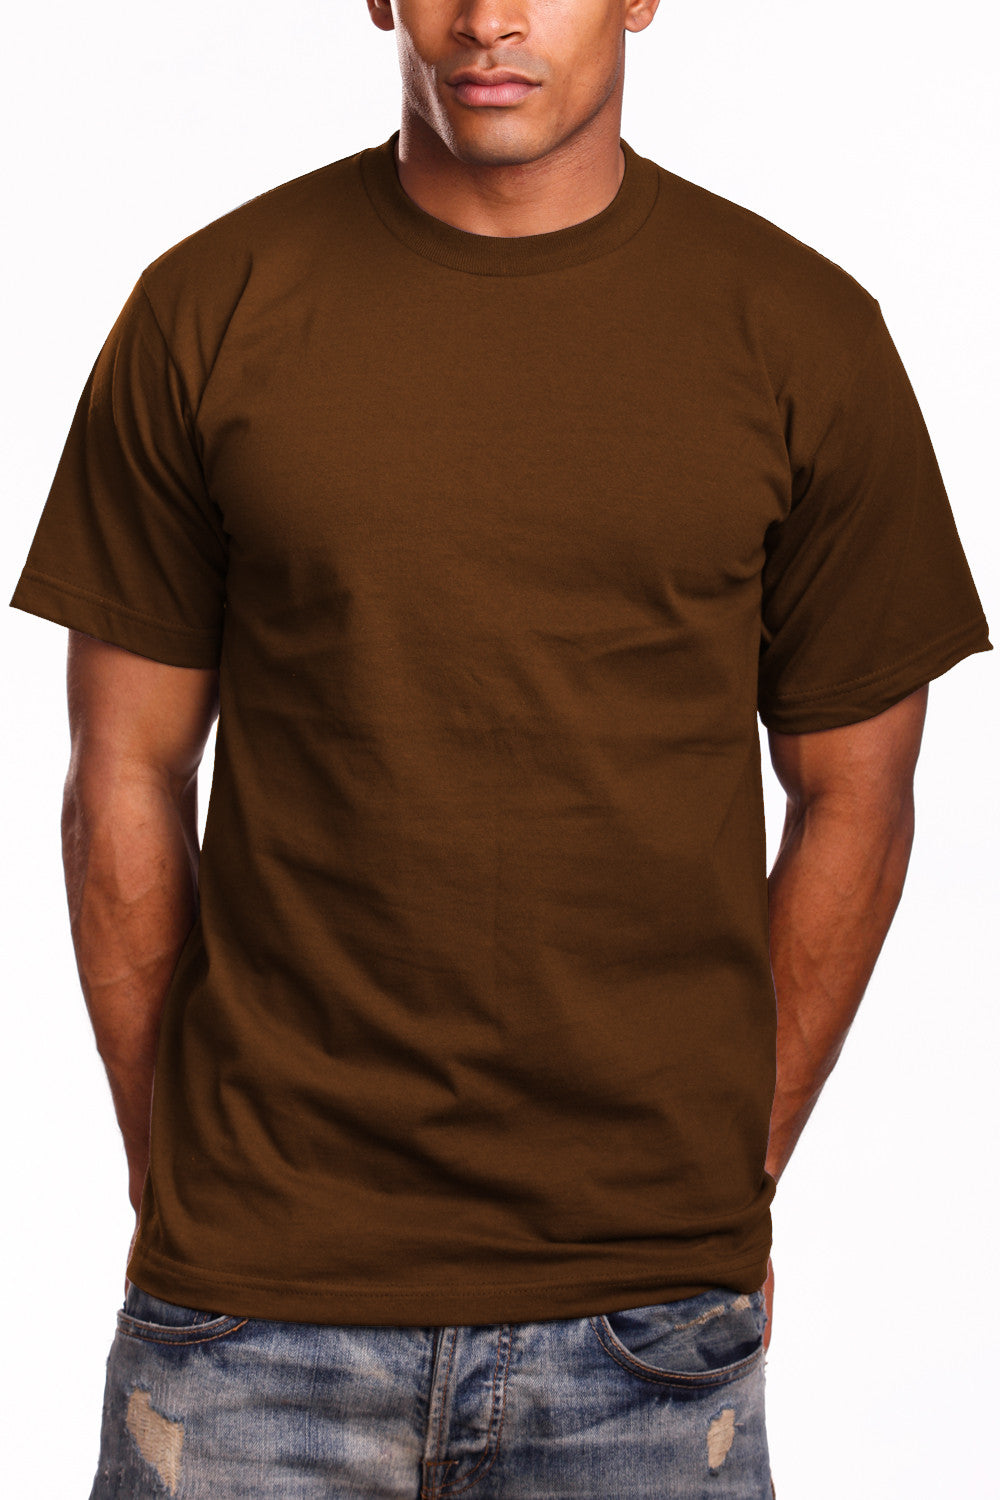 Military Brown T-Shirts in Bulk